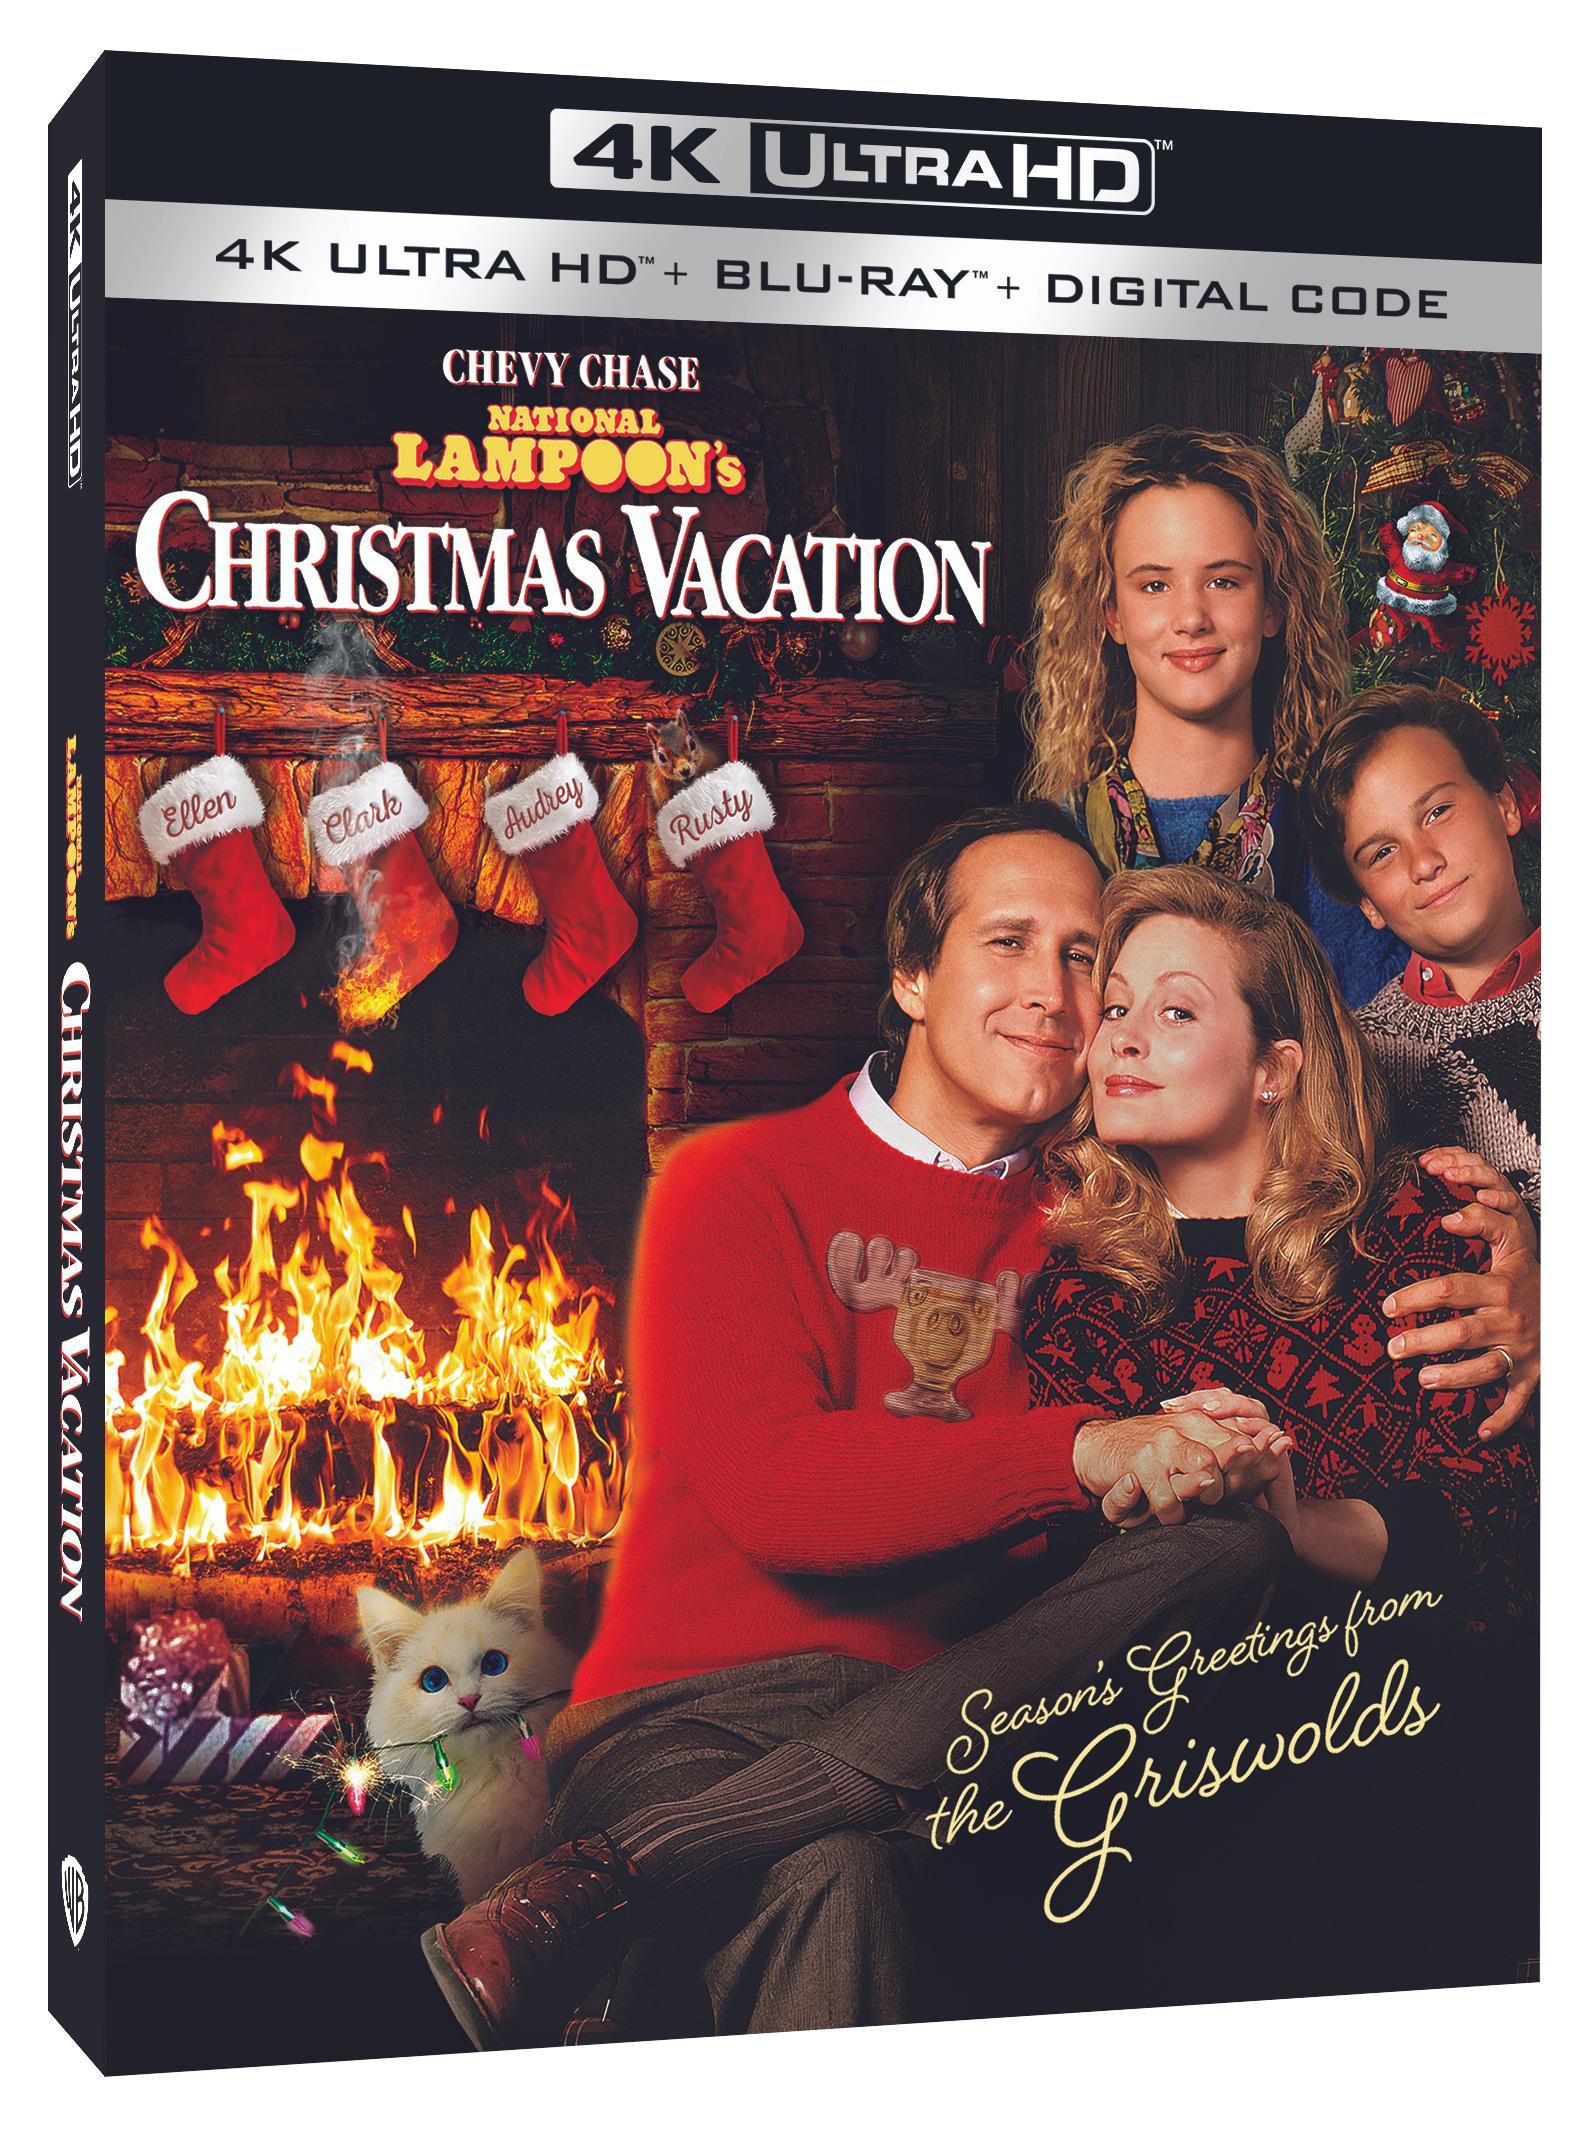 National Lampoon’s Christmas Vacation (4K Ultra HD + Blu-ray + Digital Copy) - image 2 of 5